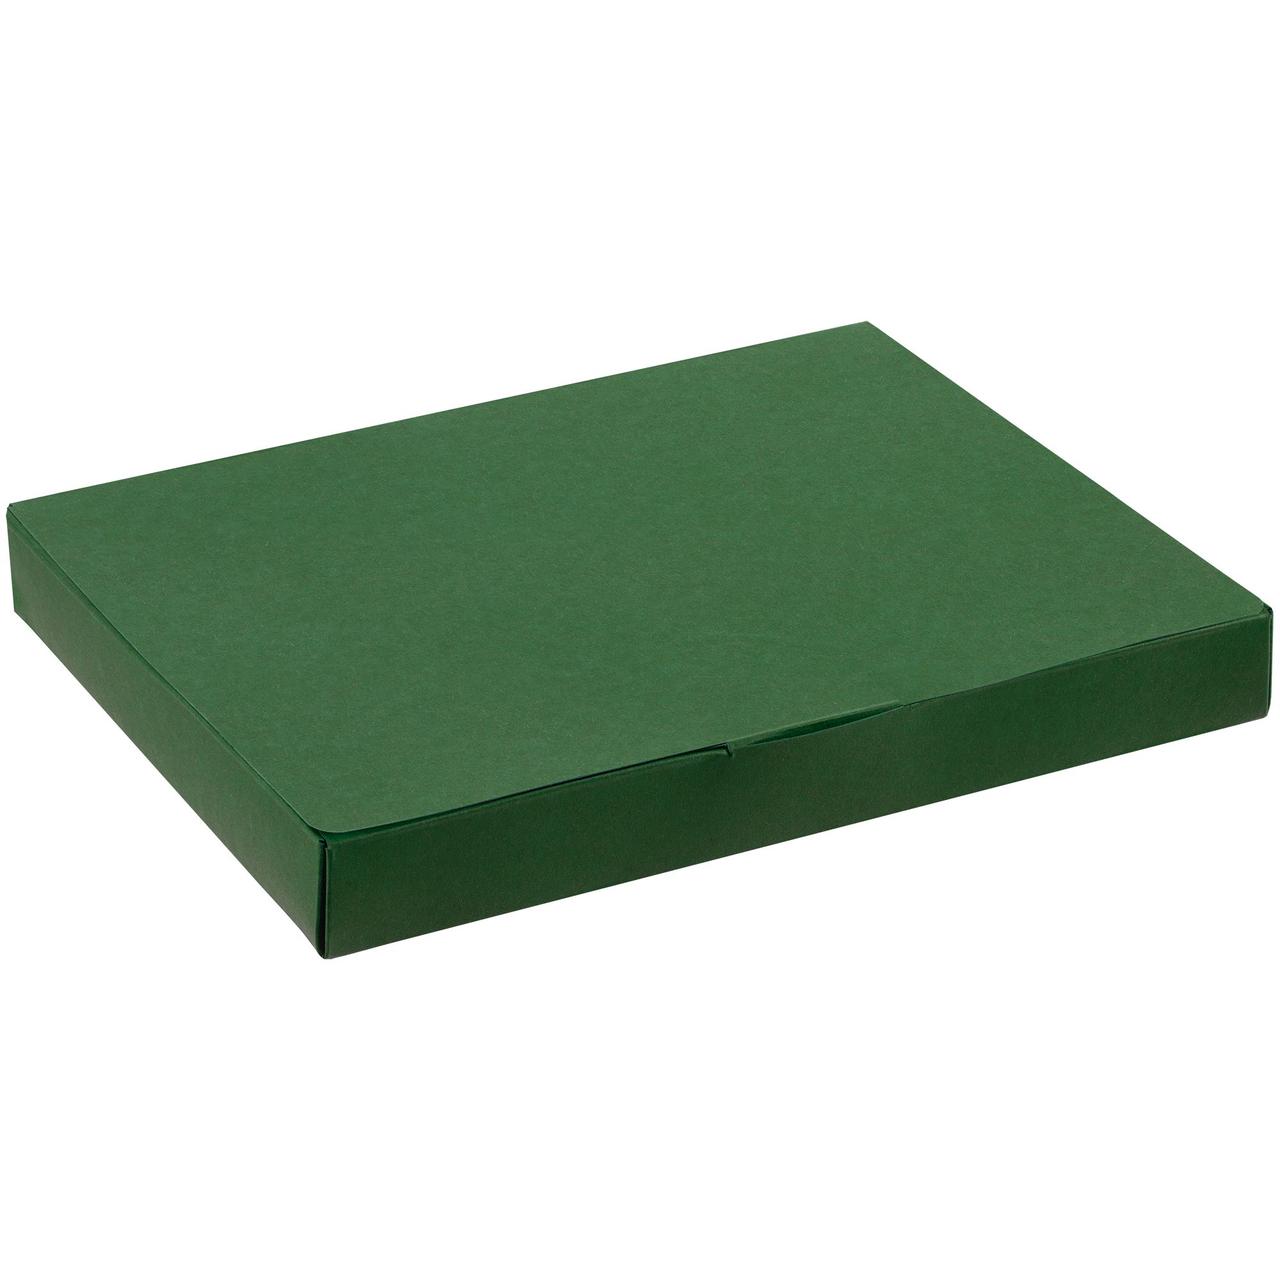 Коробка самосборная Flacky Slim, зеленая (артикул 12207.90), фото 1